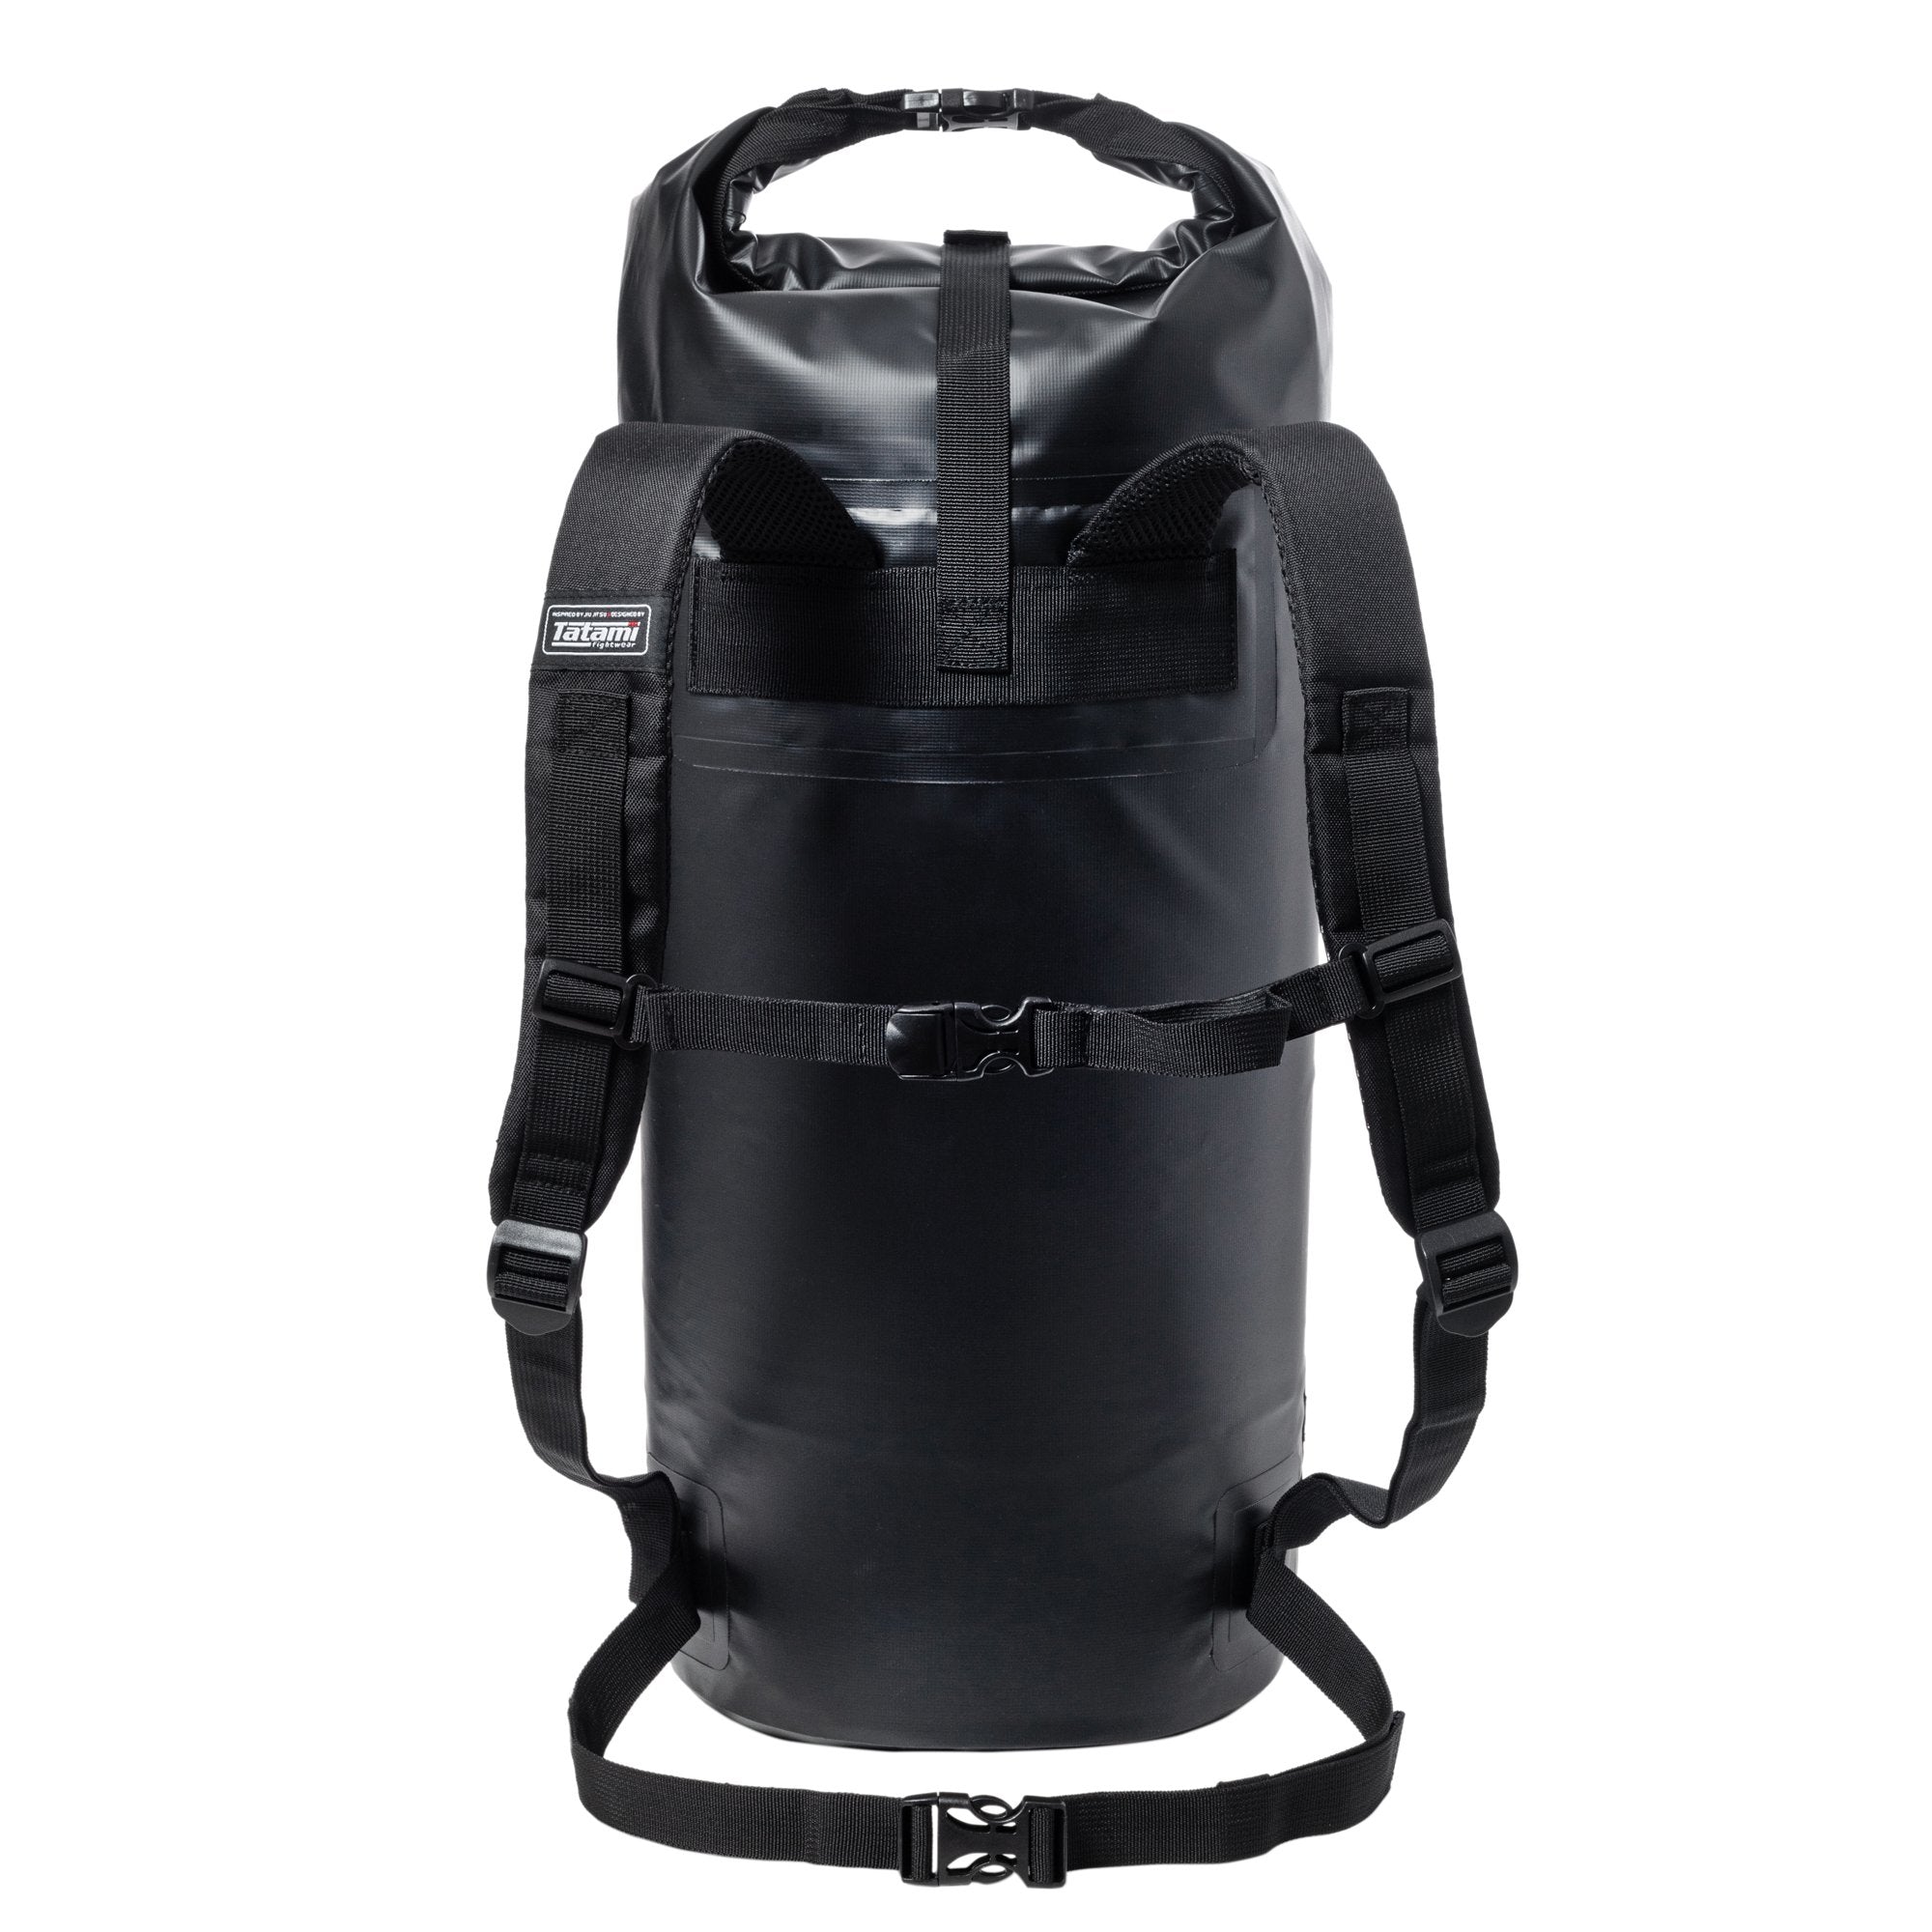 Drytech Gear Bag Black & Black